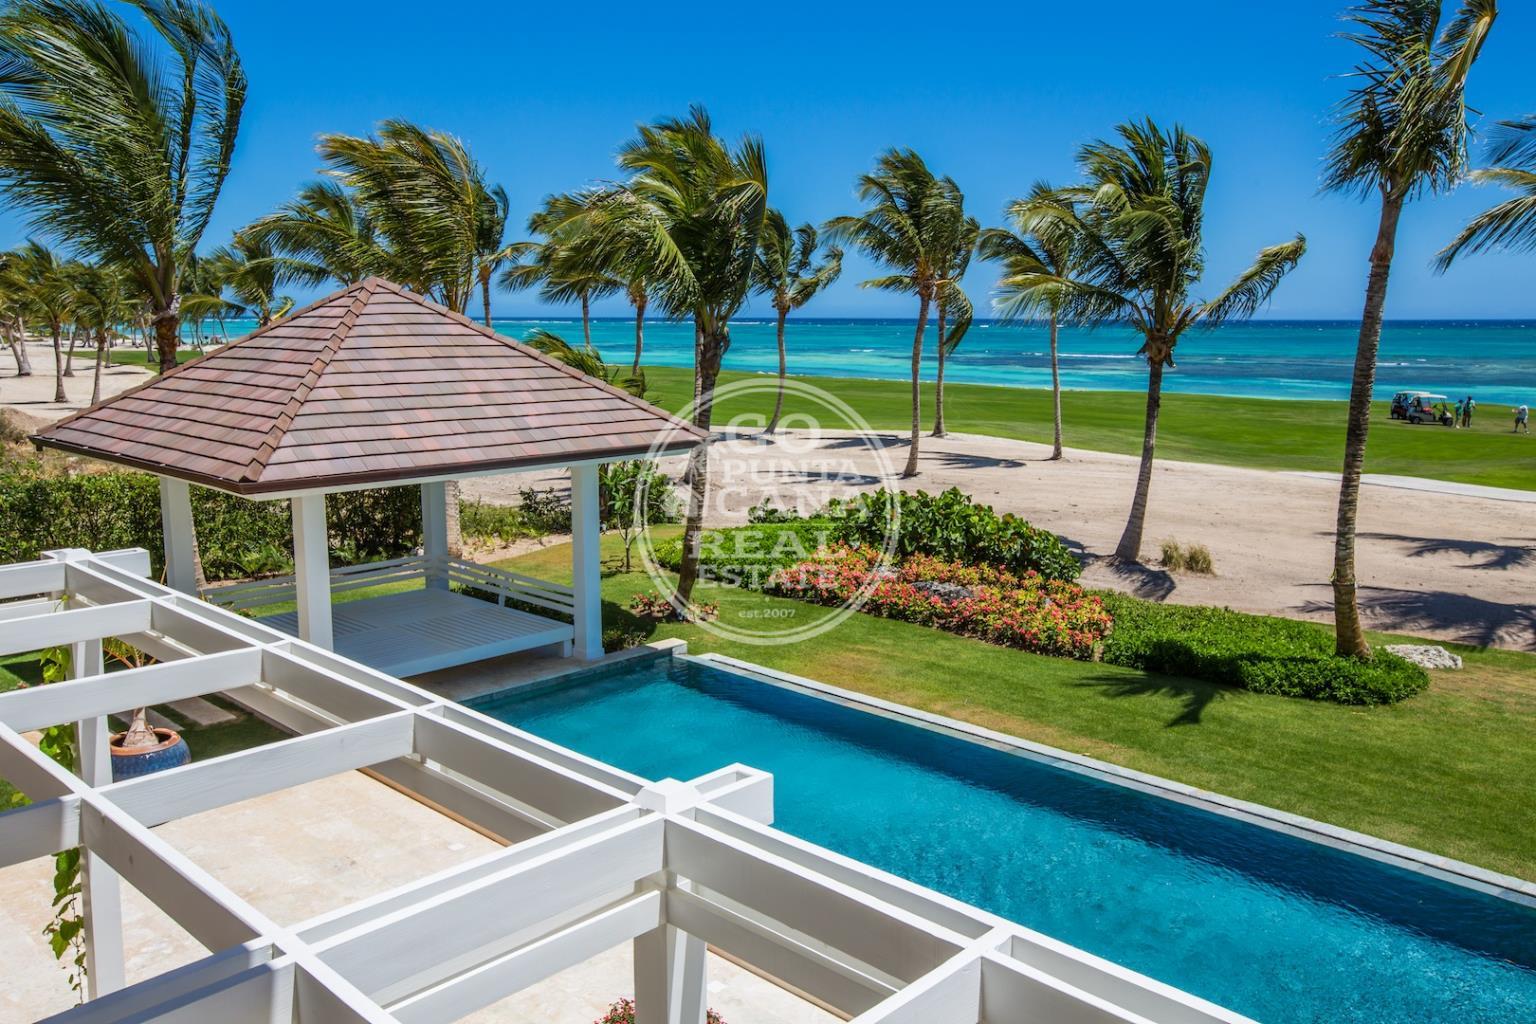 Venta Villa de Lujo Punta Cana | Arrecife 1200| Punta Cana Resort, República Dominicana – Punta Cana Resort & Club